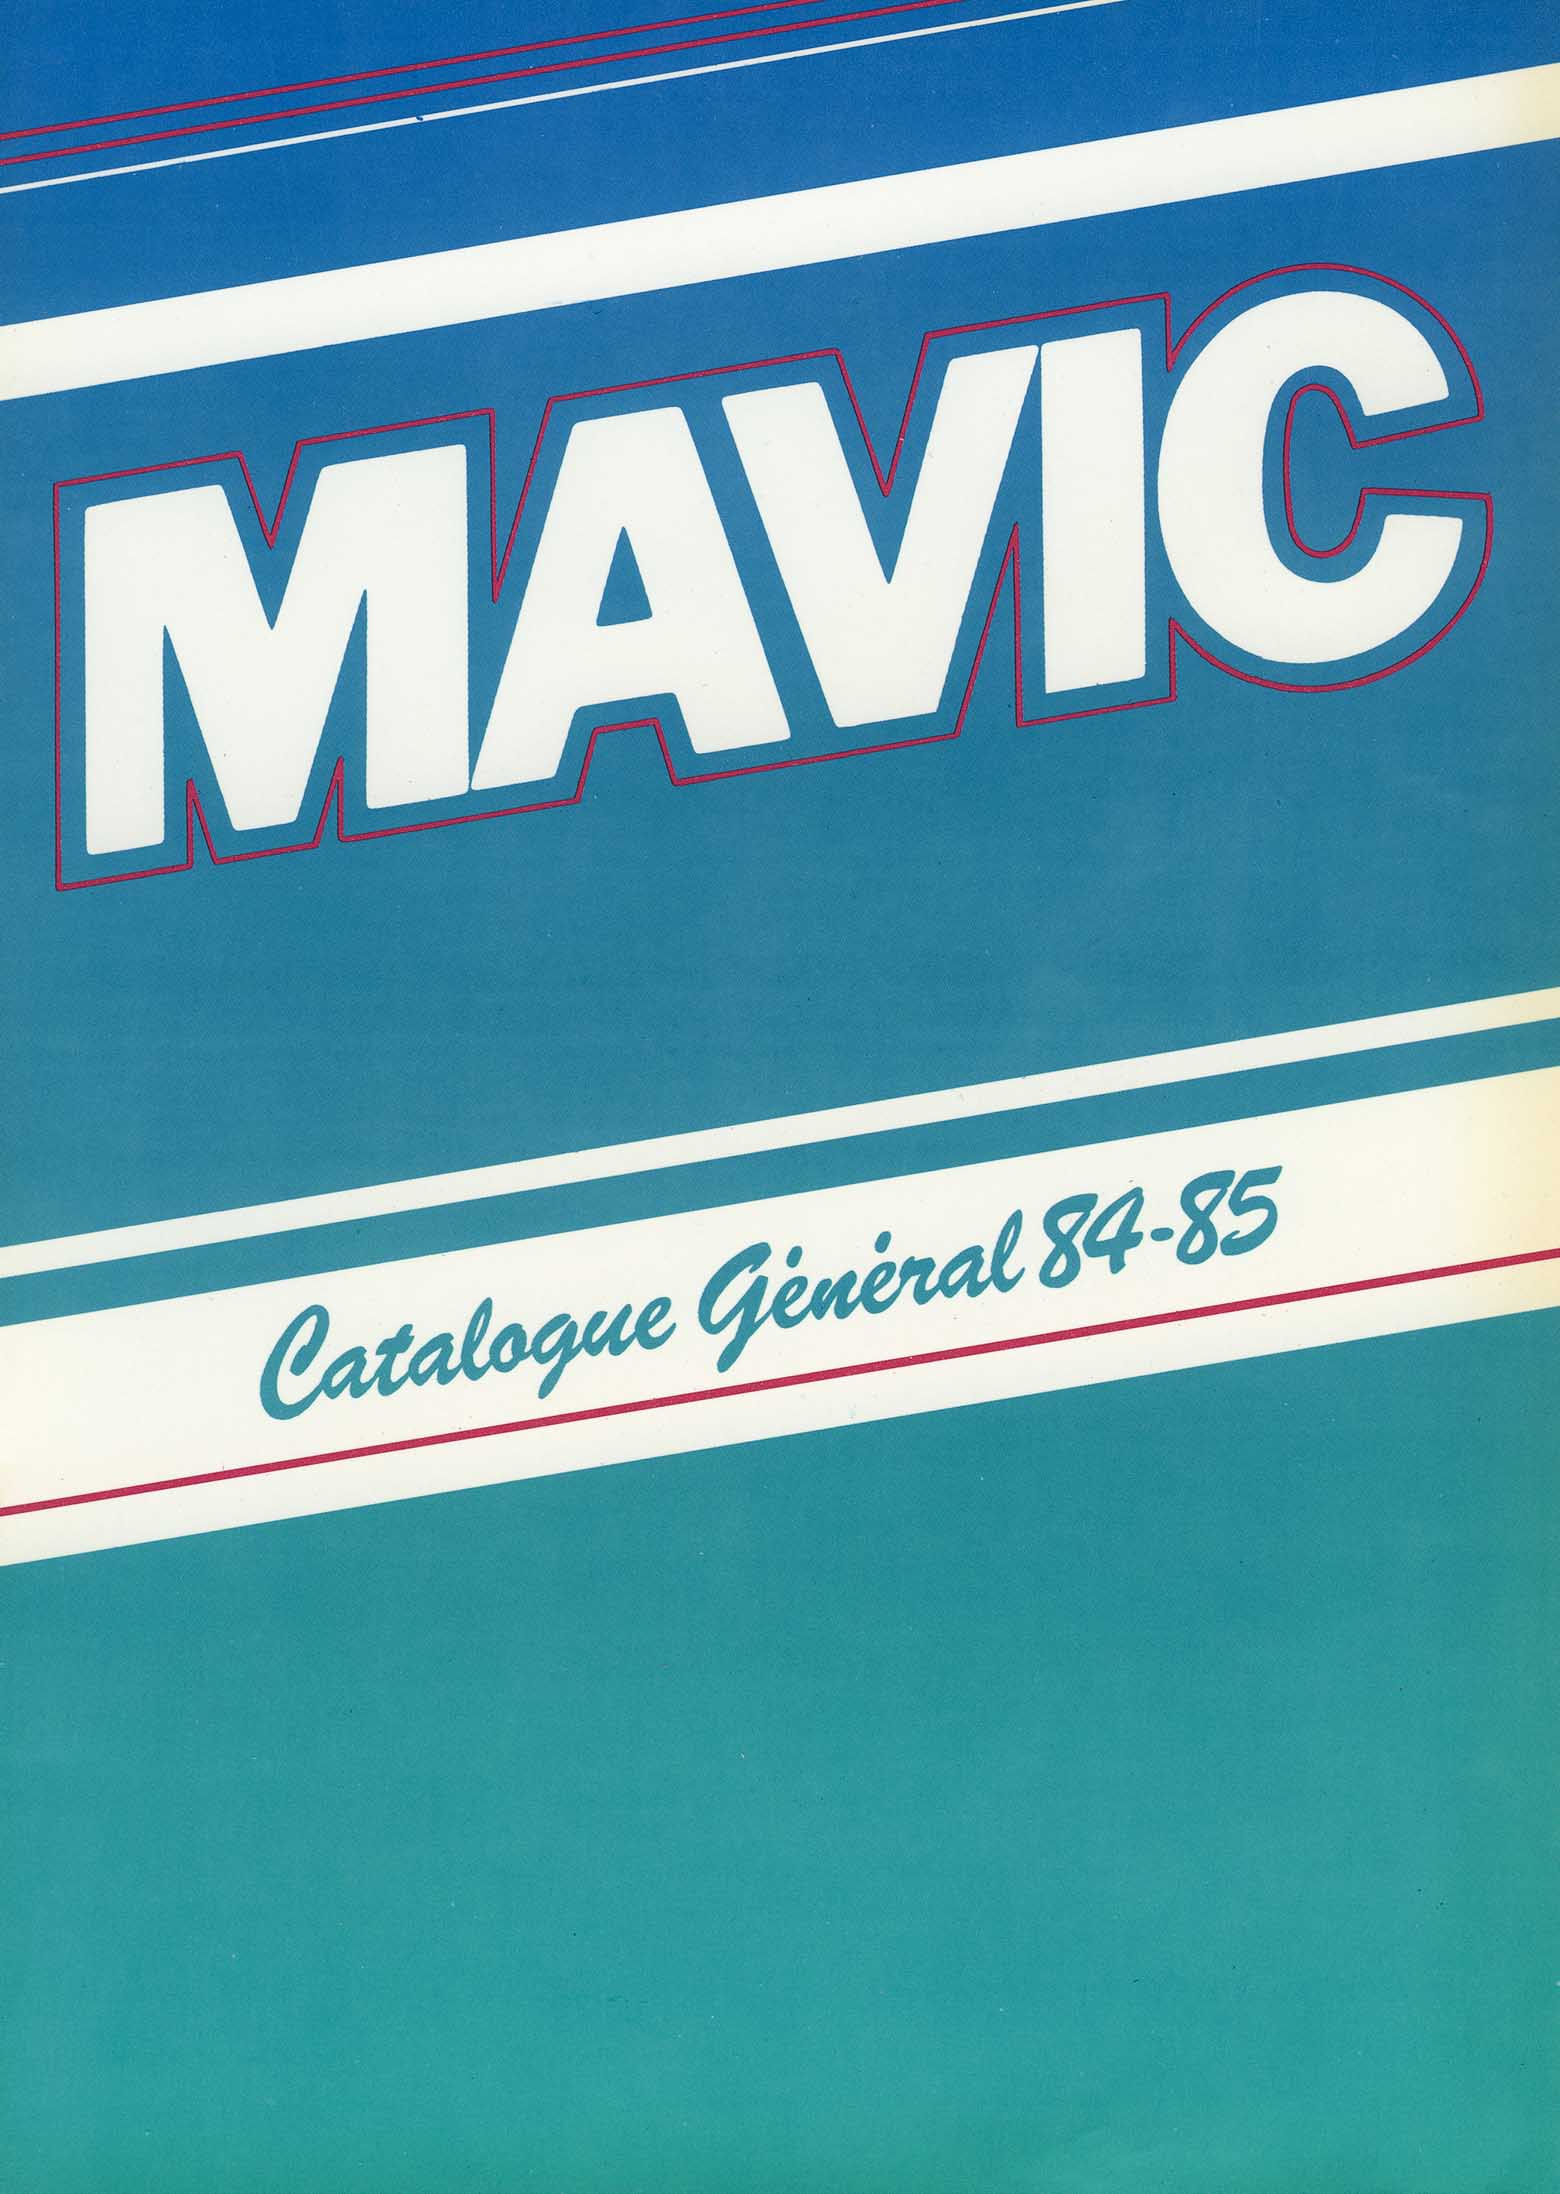 MAVIC Catalogue Generale 84-85 front cover main image